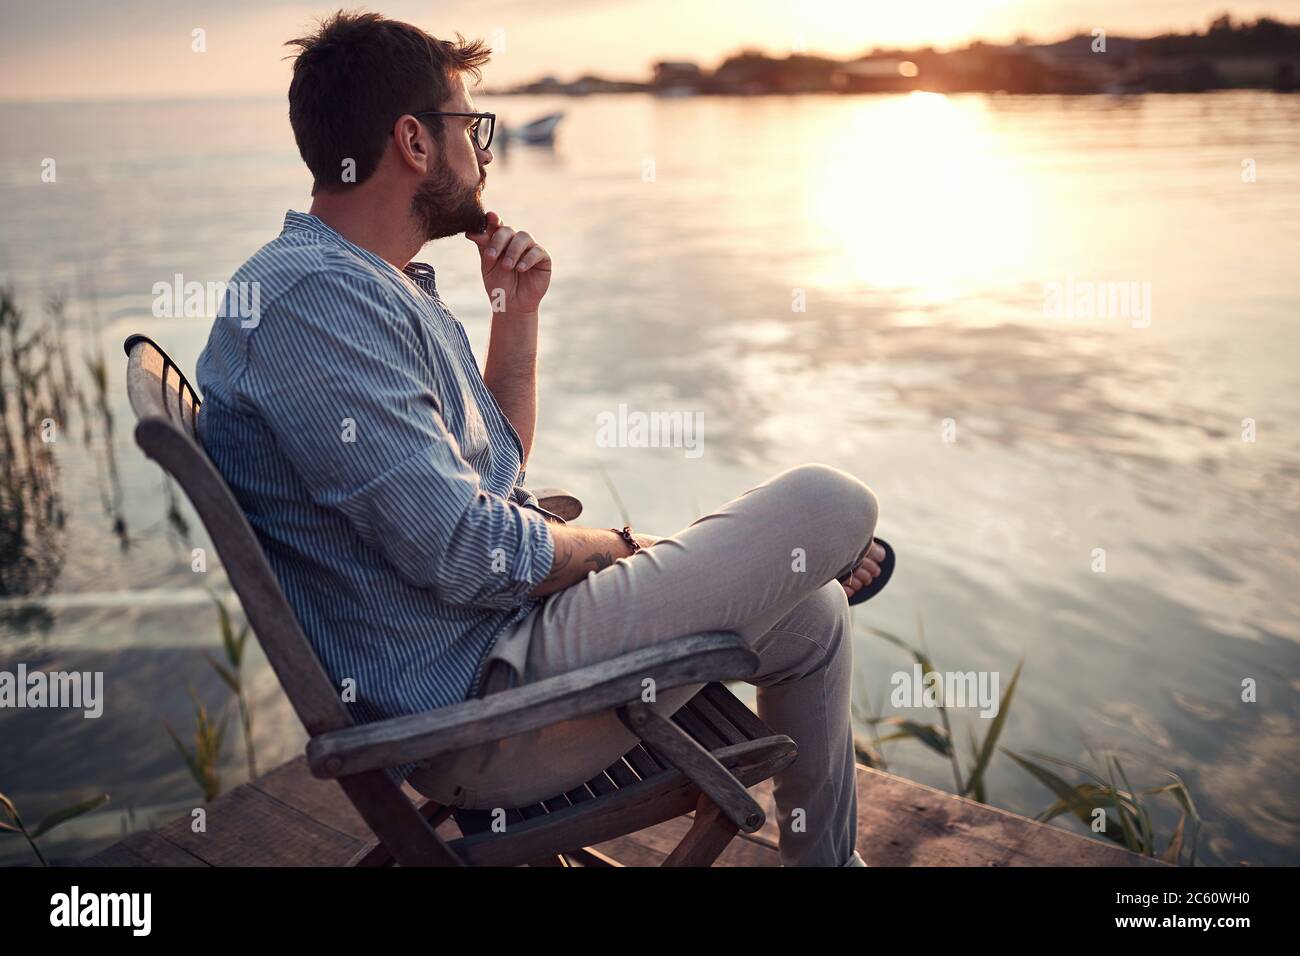 young beardy guy sitting alone on a river coast, enjoying the sunset, thinking Stock Photo